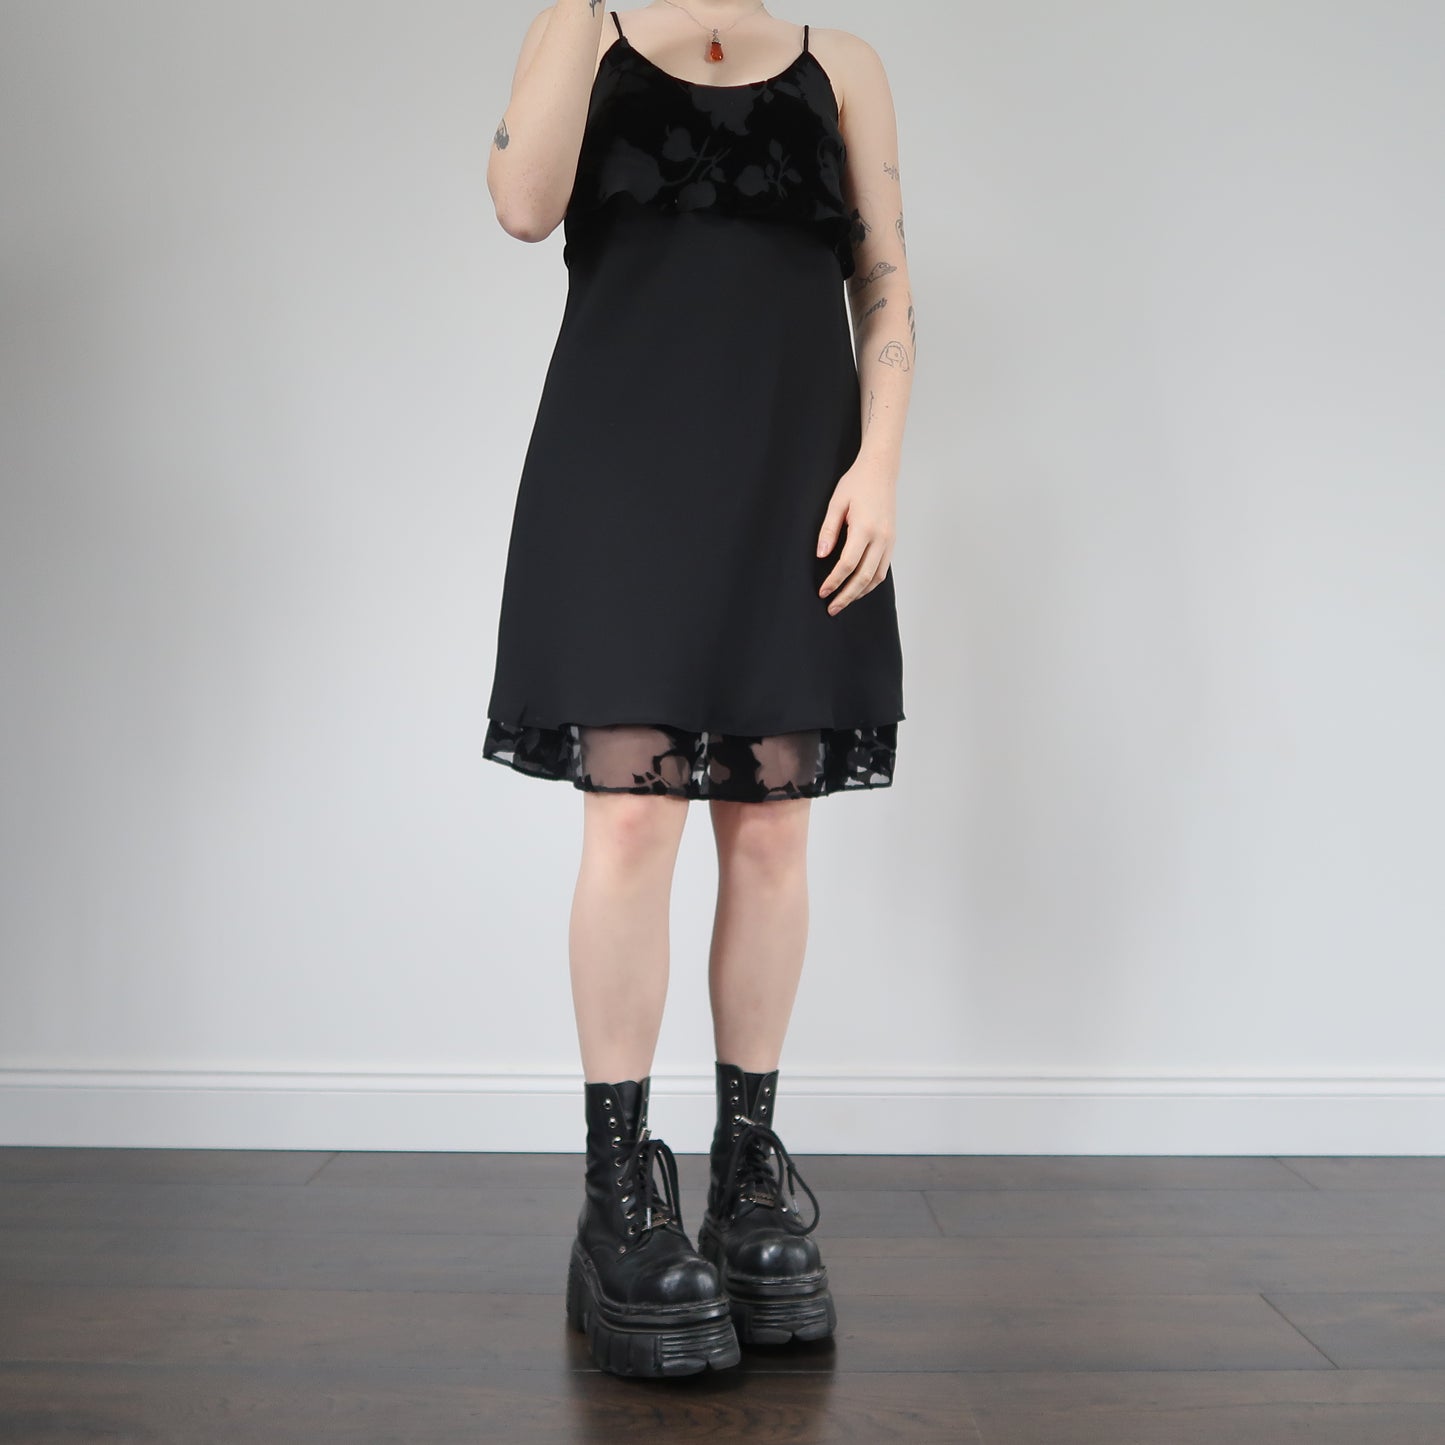 Black dress - size 12